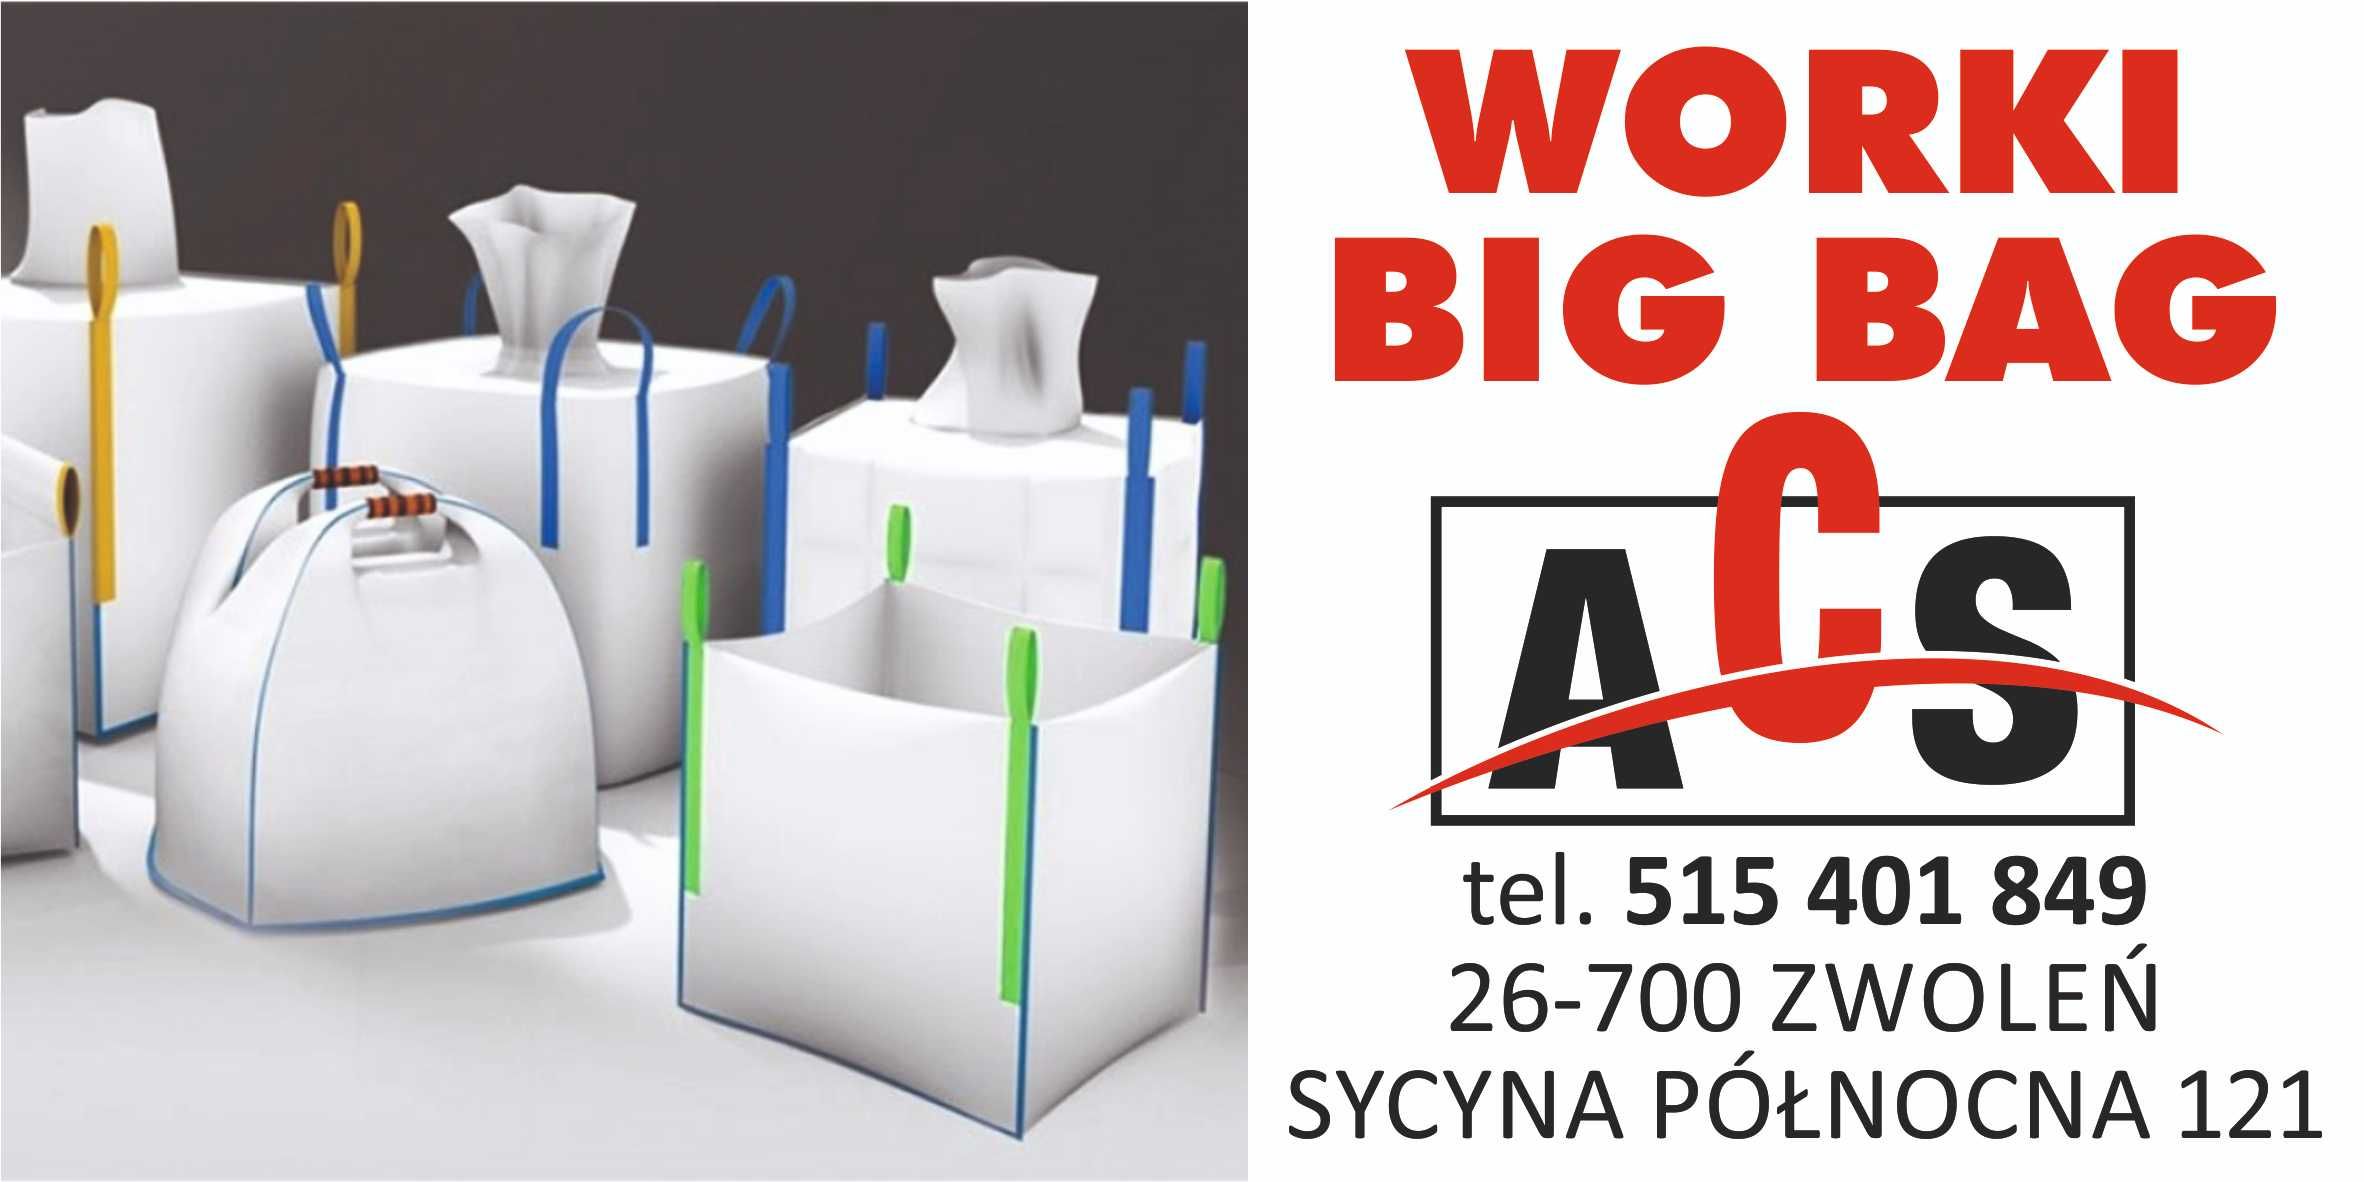 100x110x160cm. big bag, worki, kontener, hurt-detal, Sycyna